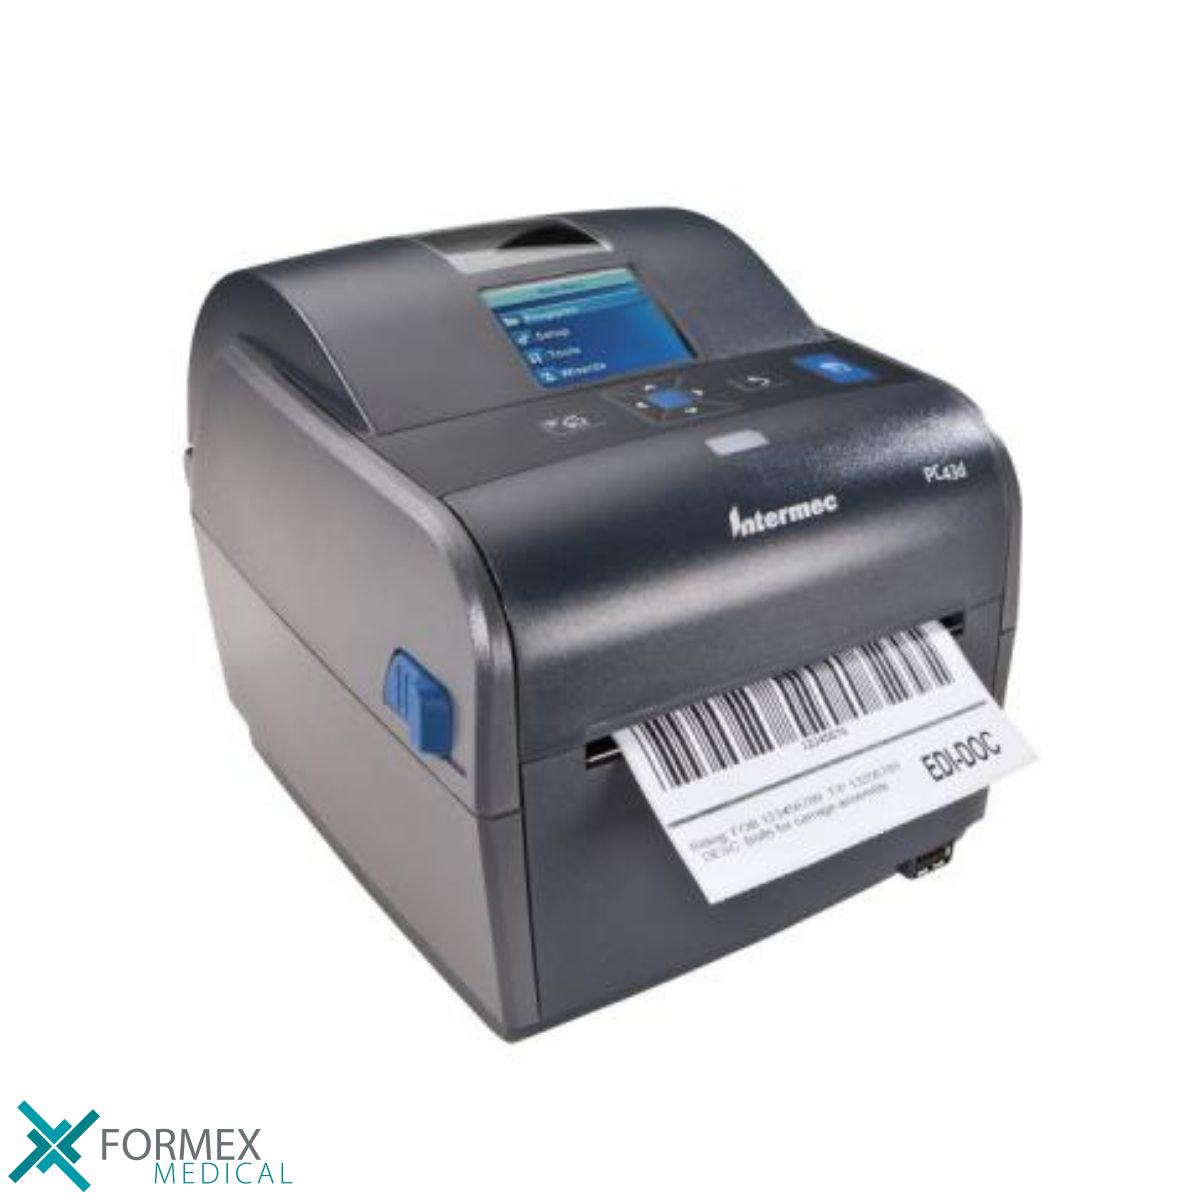 Intermec PC43d, Intermec PC43tt, labelprinter, labelmakers, barcode printers, etikettenprinters, barcodeprinters, labelwriters, zebra labelprinter, zebra etiketten printer, intermec label printers